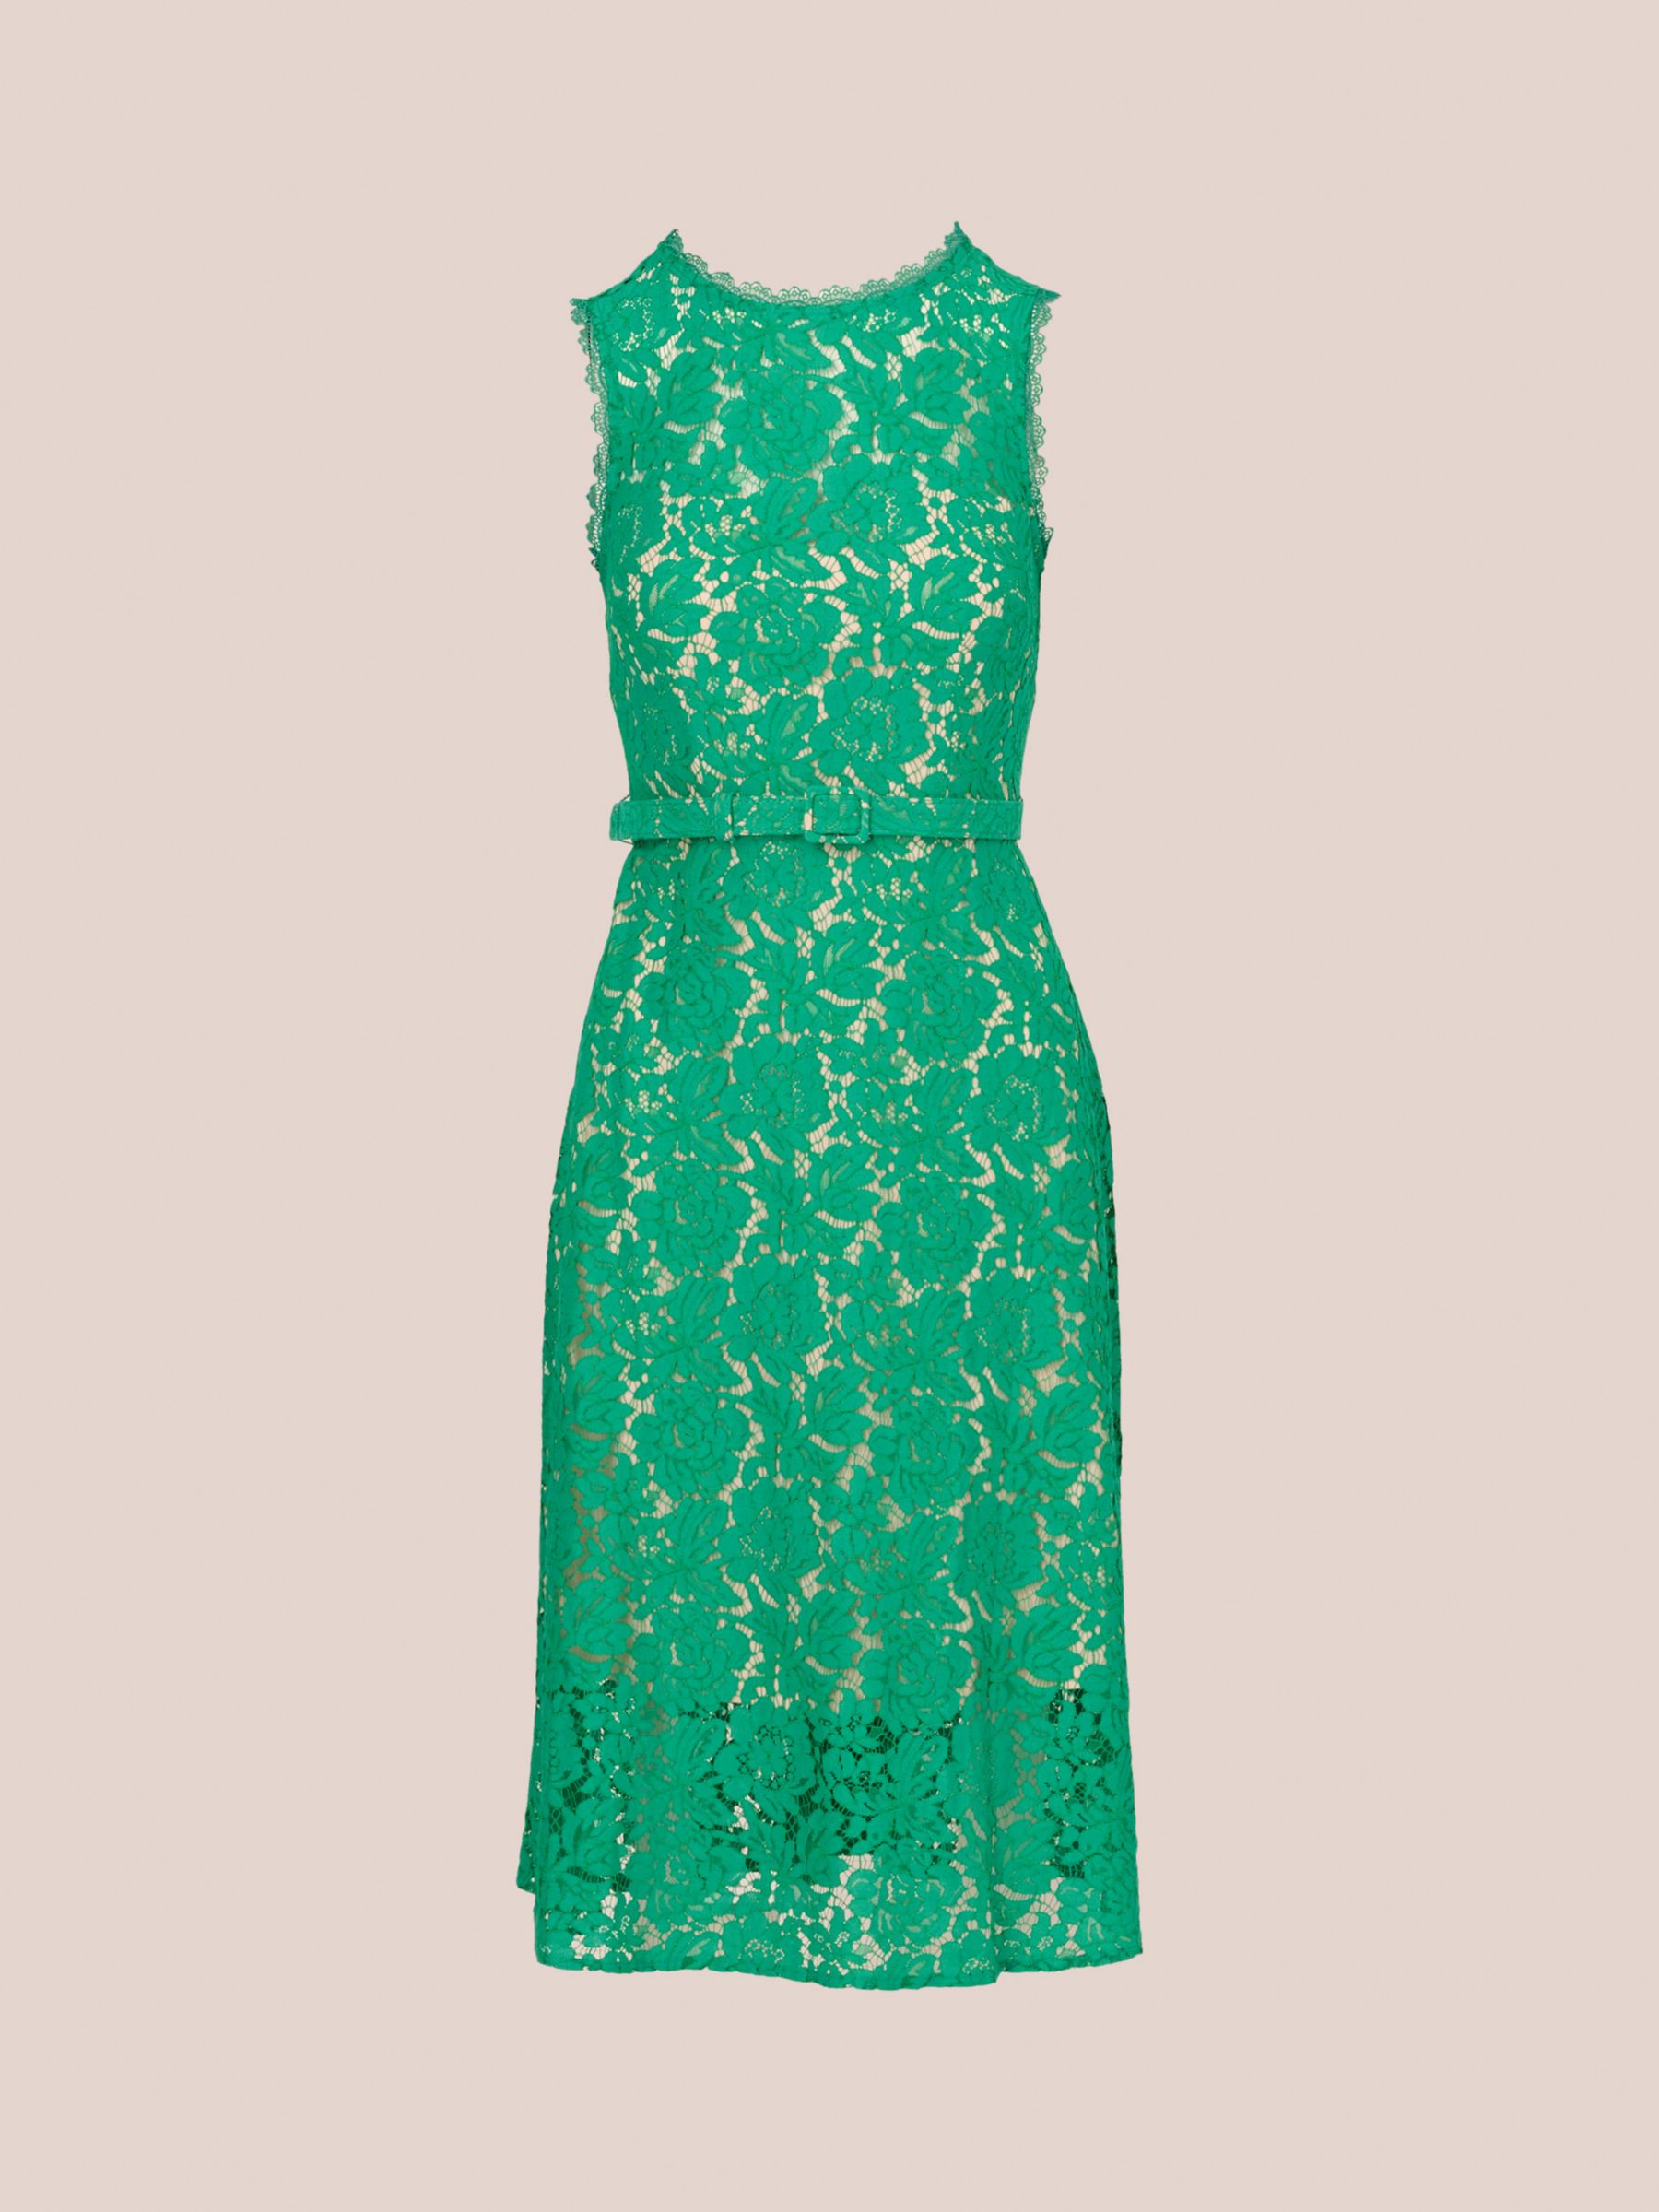 Adrianna Papell Knit Lace Flared Dress, Botanic Green, 12